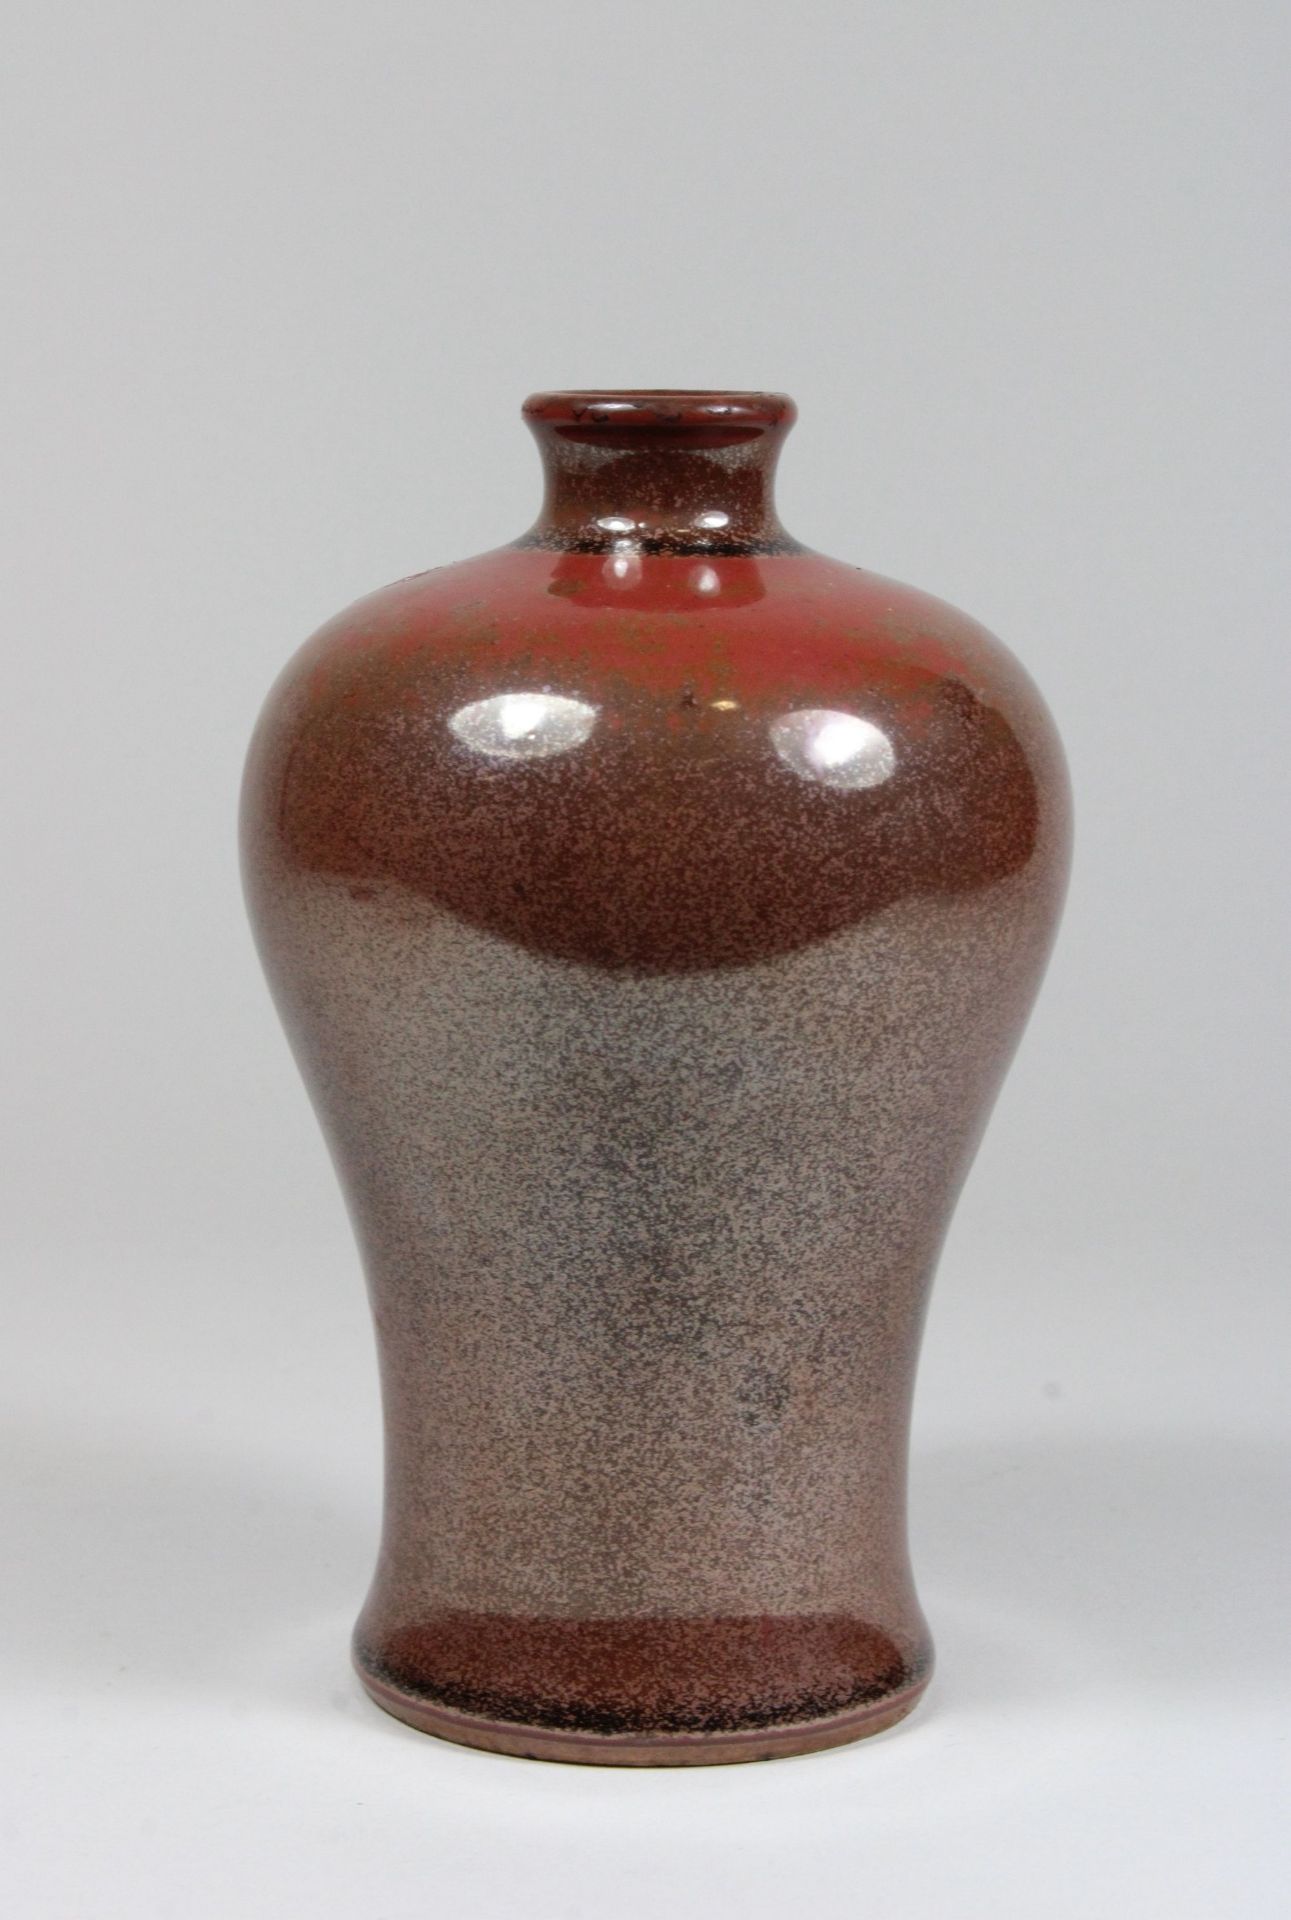 Meiping Vase, China, Porzellan, wohl 19/20. Jh., Eisenrost-Glasur. H.: 14 cm. Guter, altersbedingter